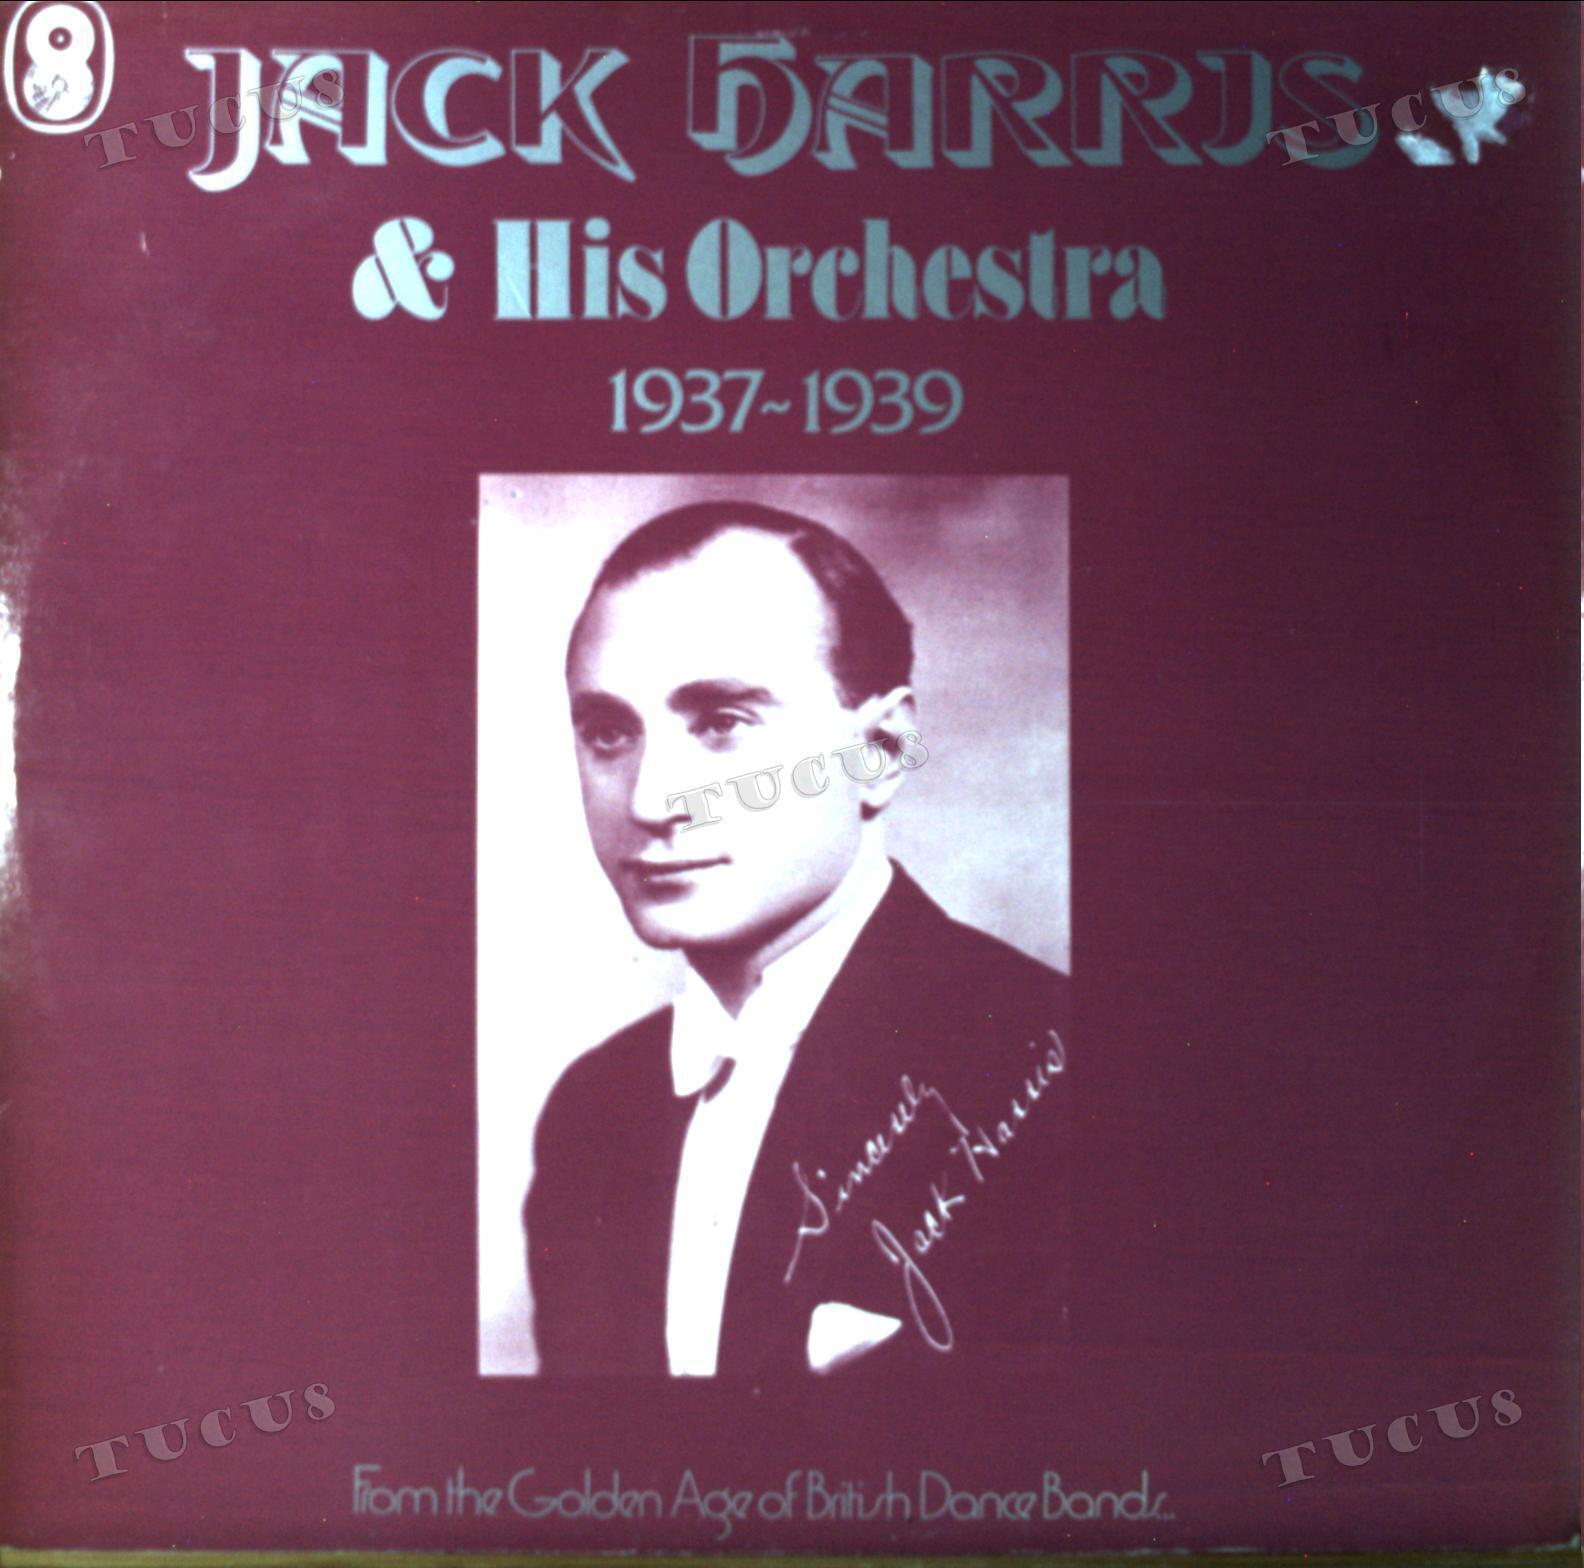 Jack Harris & His Orchestra - 1937-1939 LP (VG/VG) .*